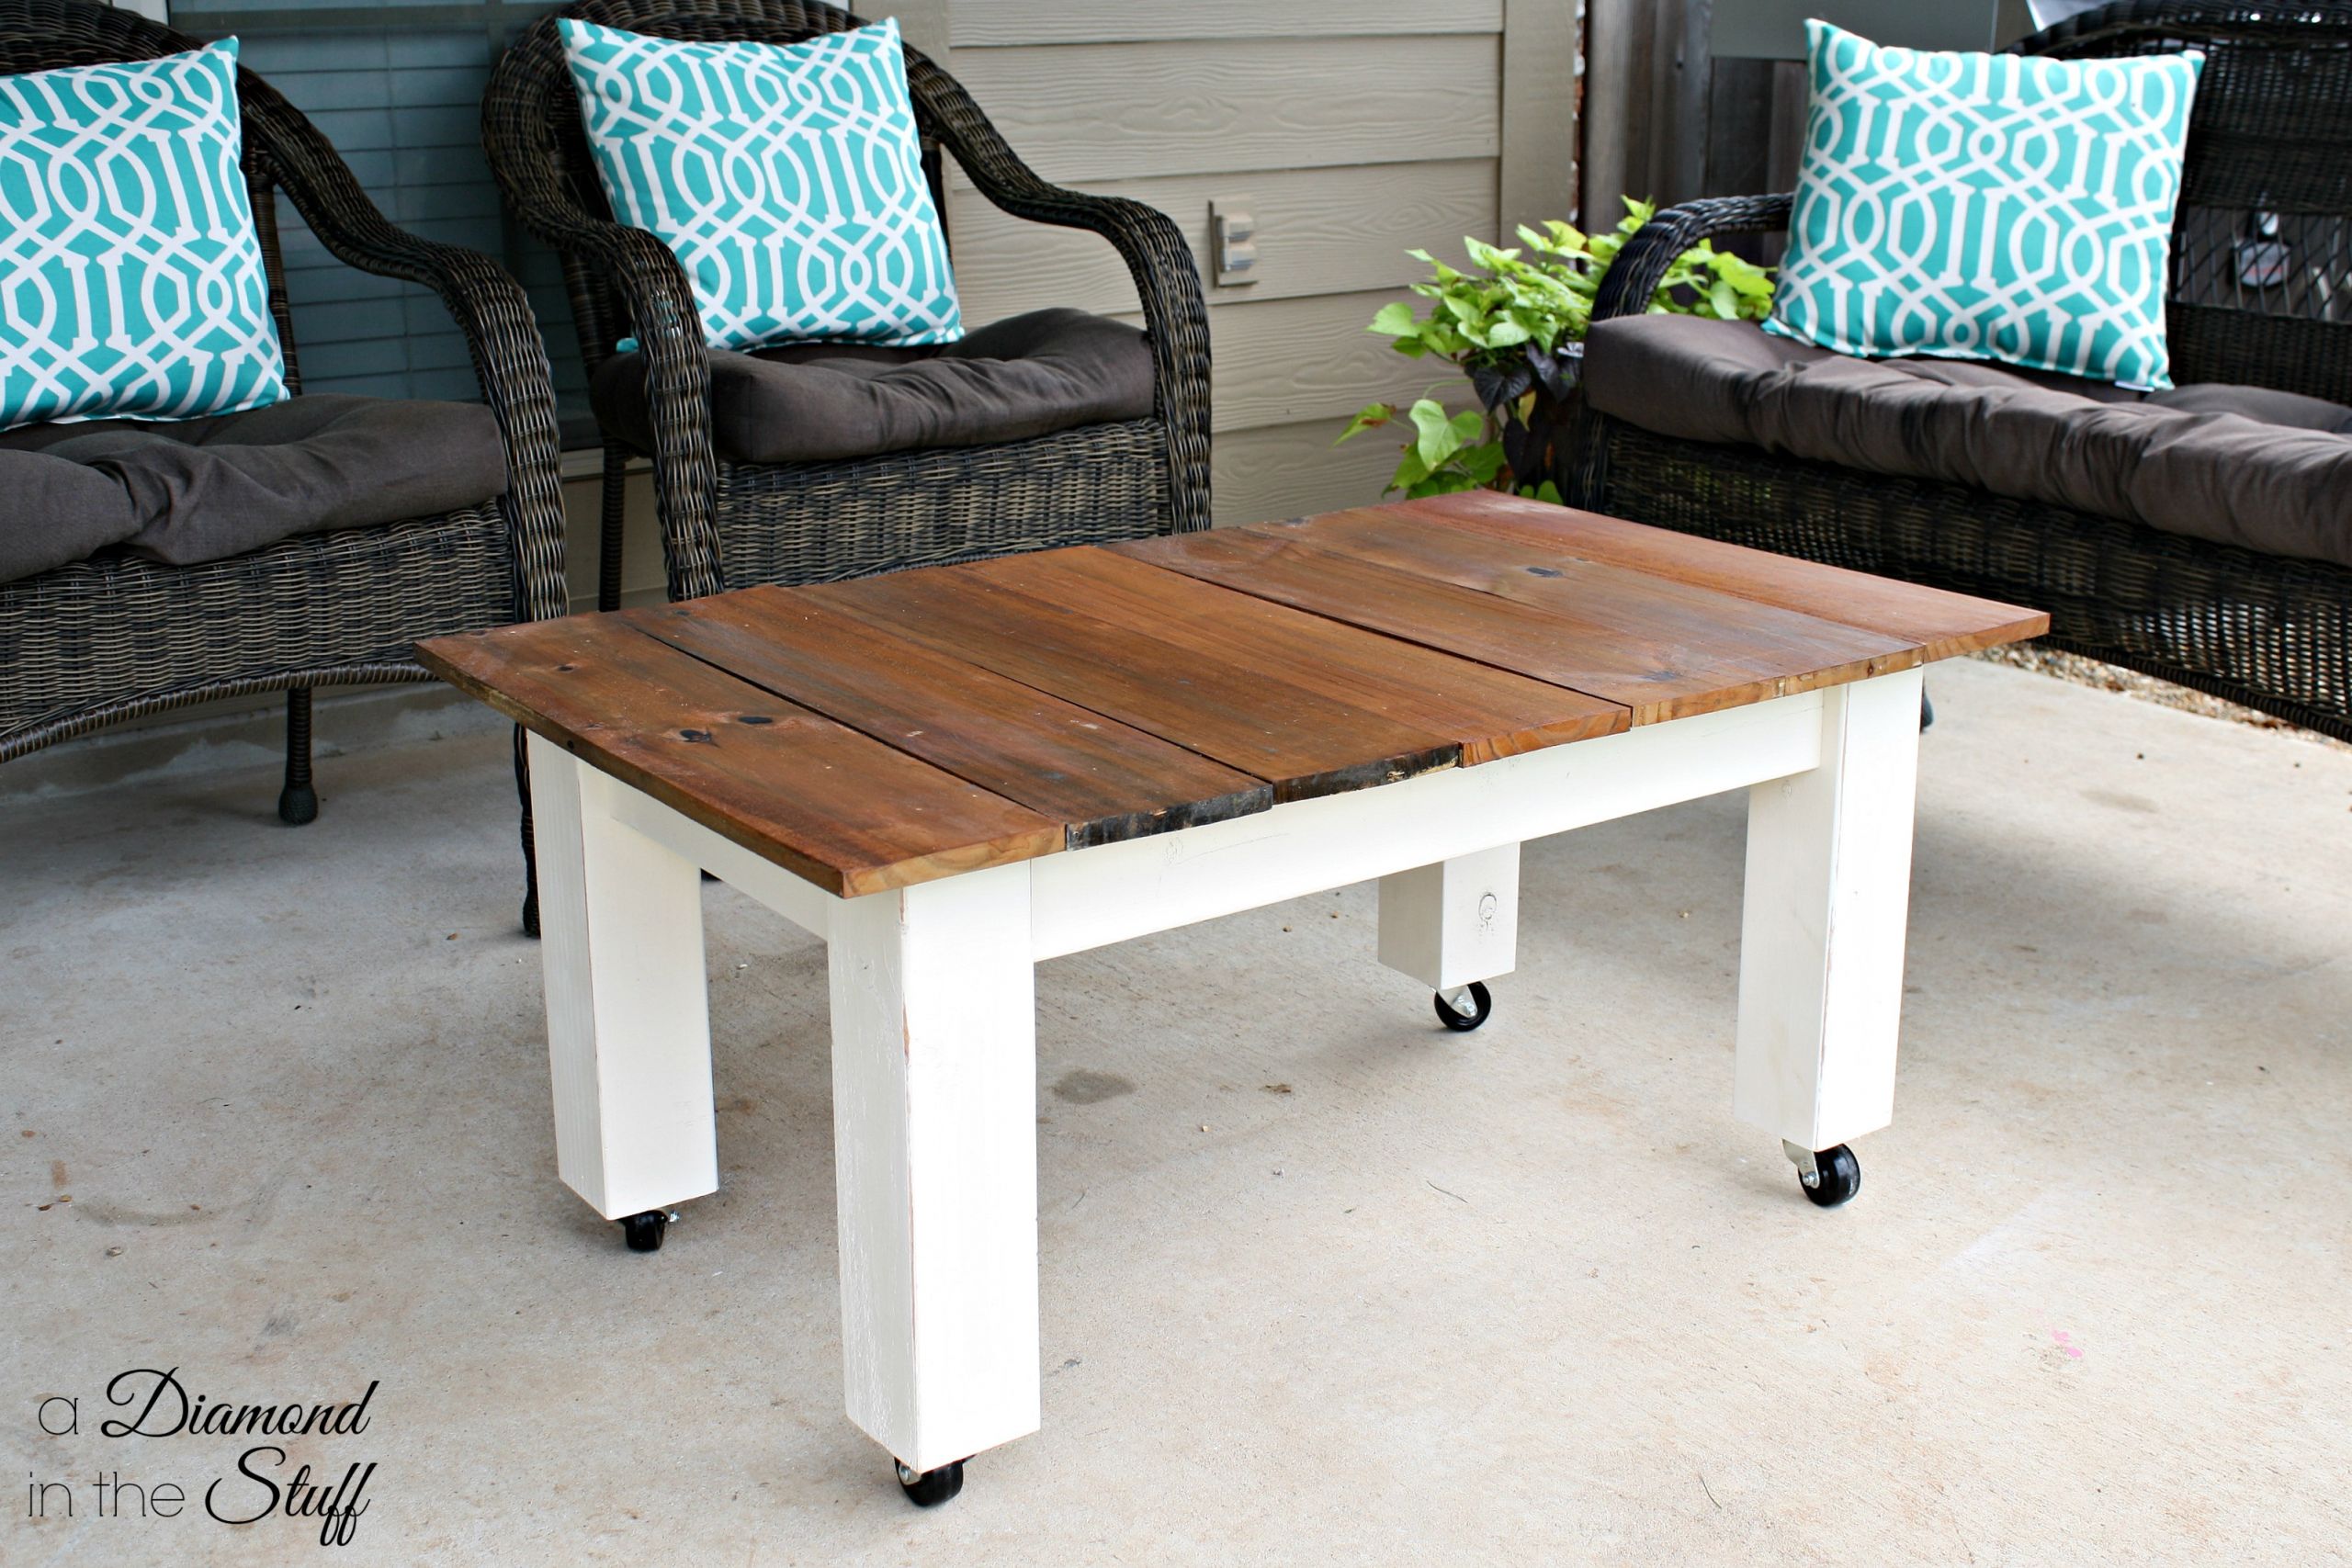 DIY Outdoor Coffee Table
 DIY Outdoor Coffee Table – A Diamond in the Stuff